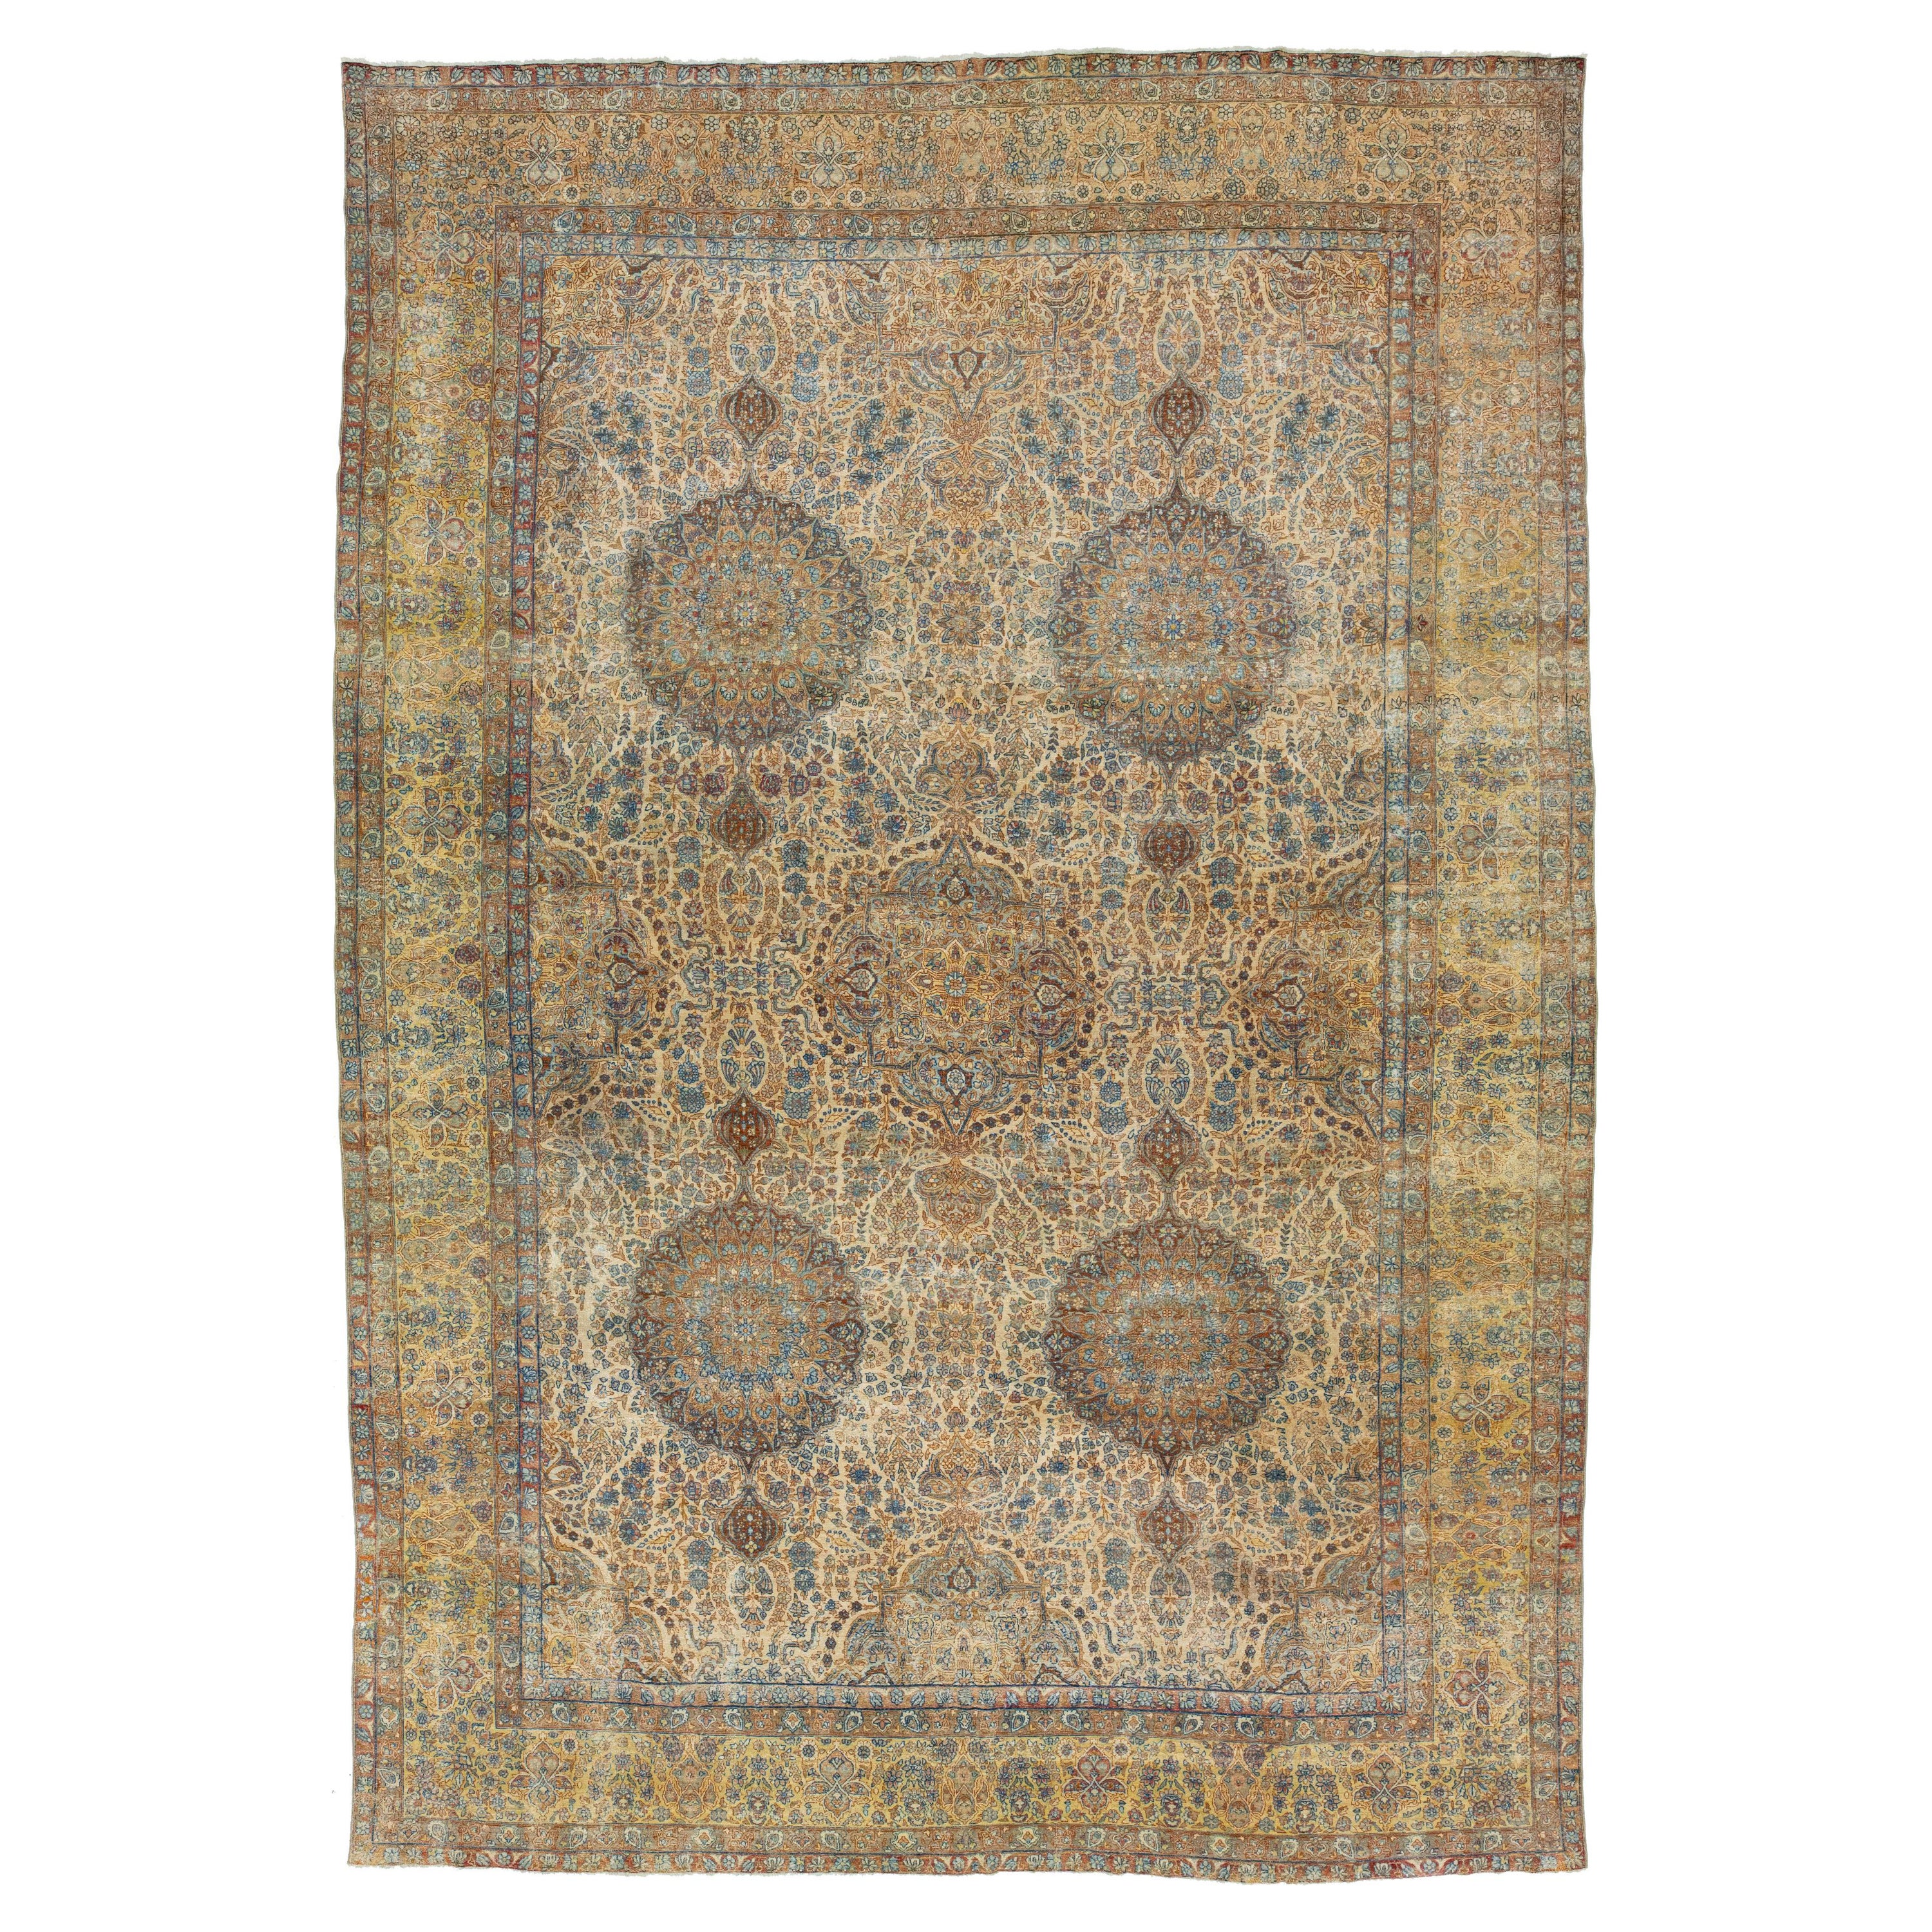 1910s Antique Kerman Persian Wool Rug with Multicolor Rosette Motif 